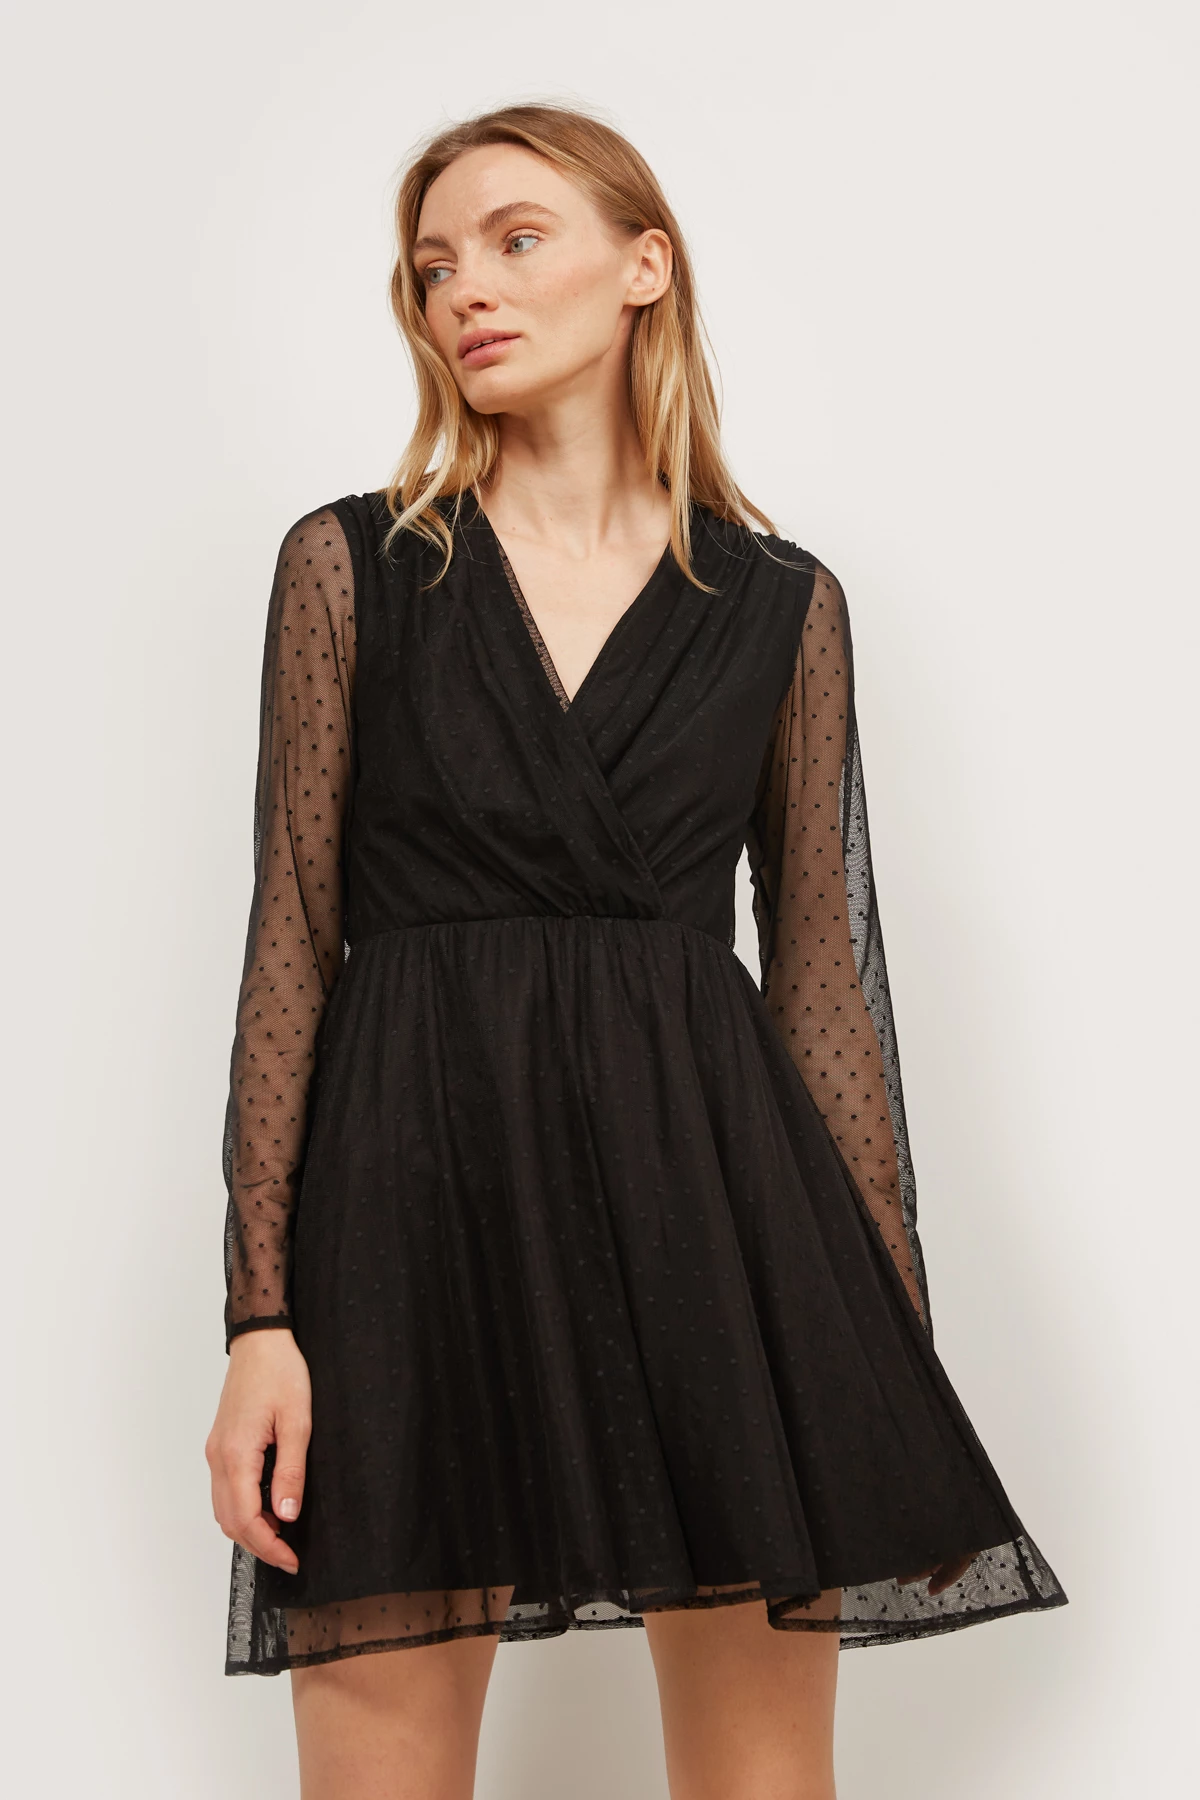 Black mesh short dress, photo 2